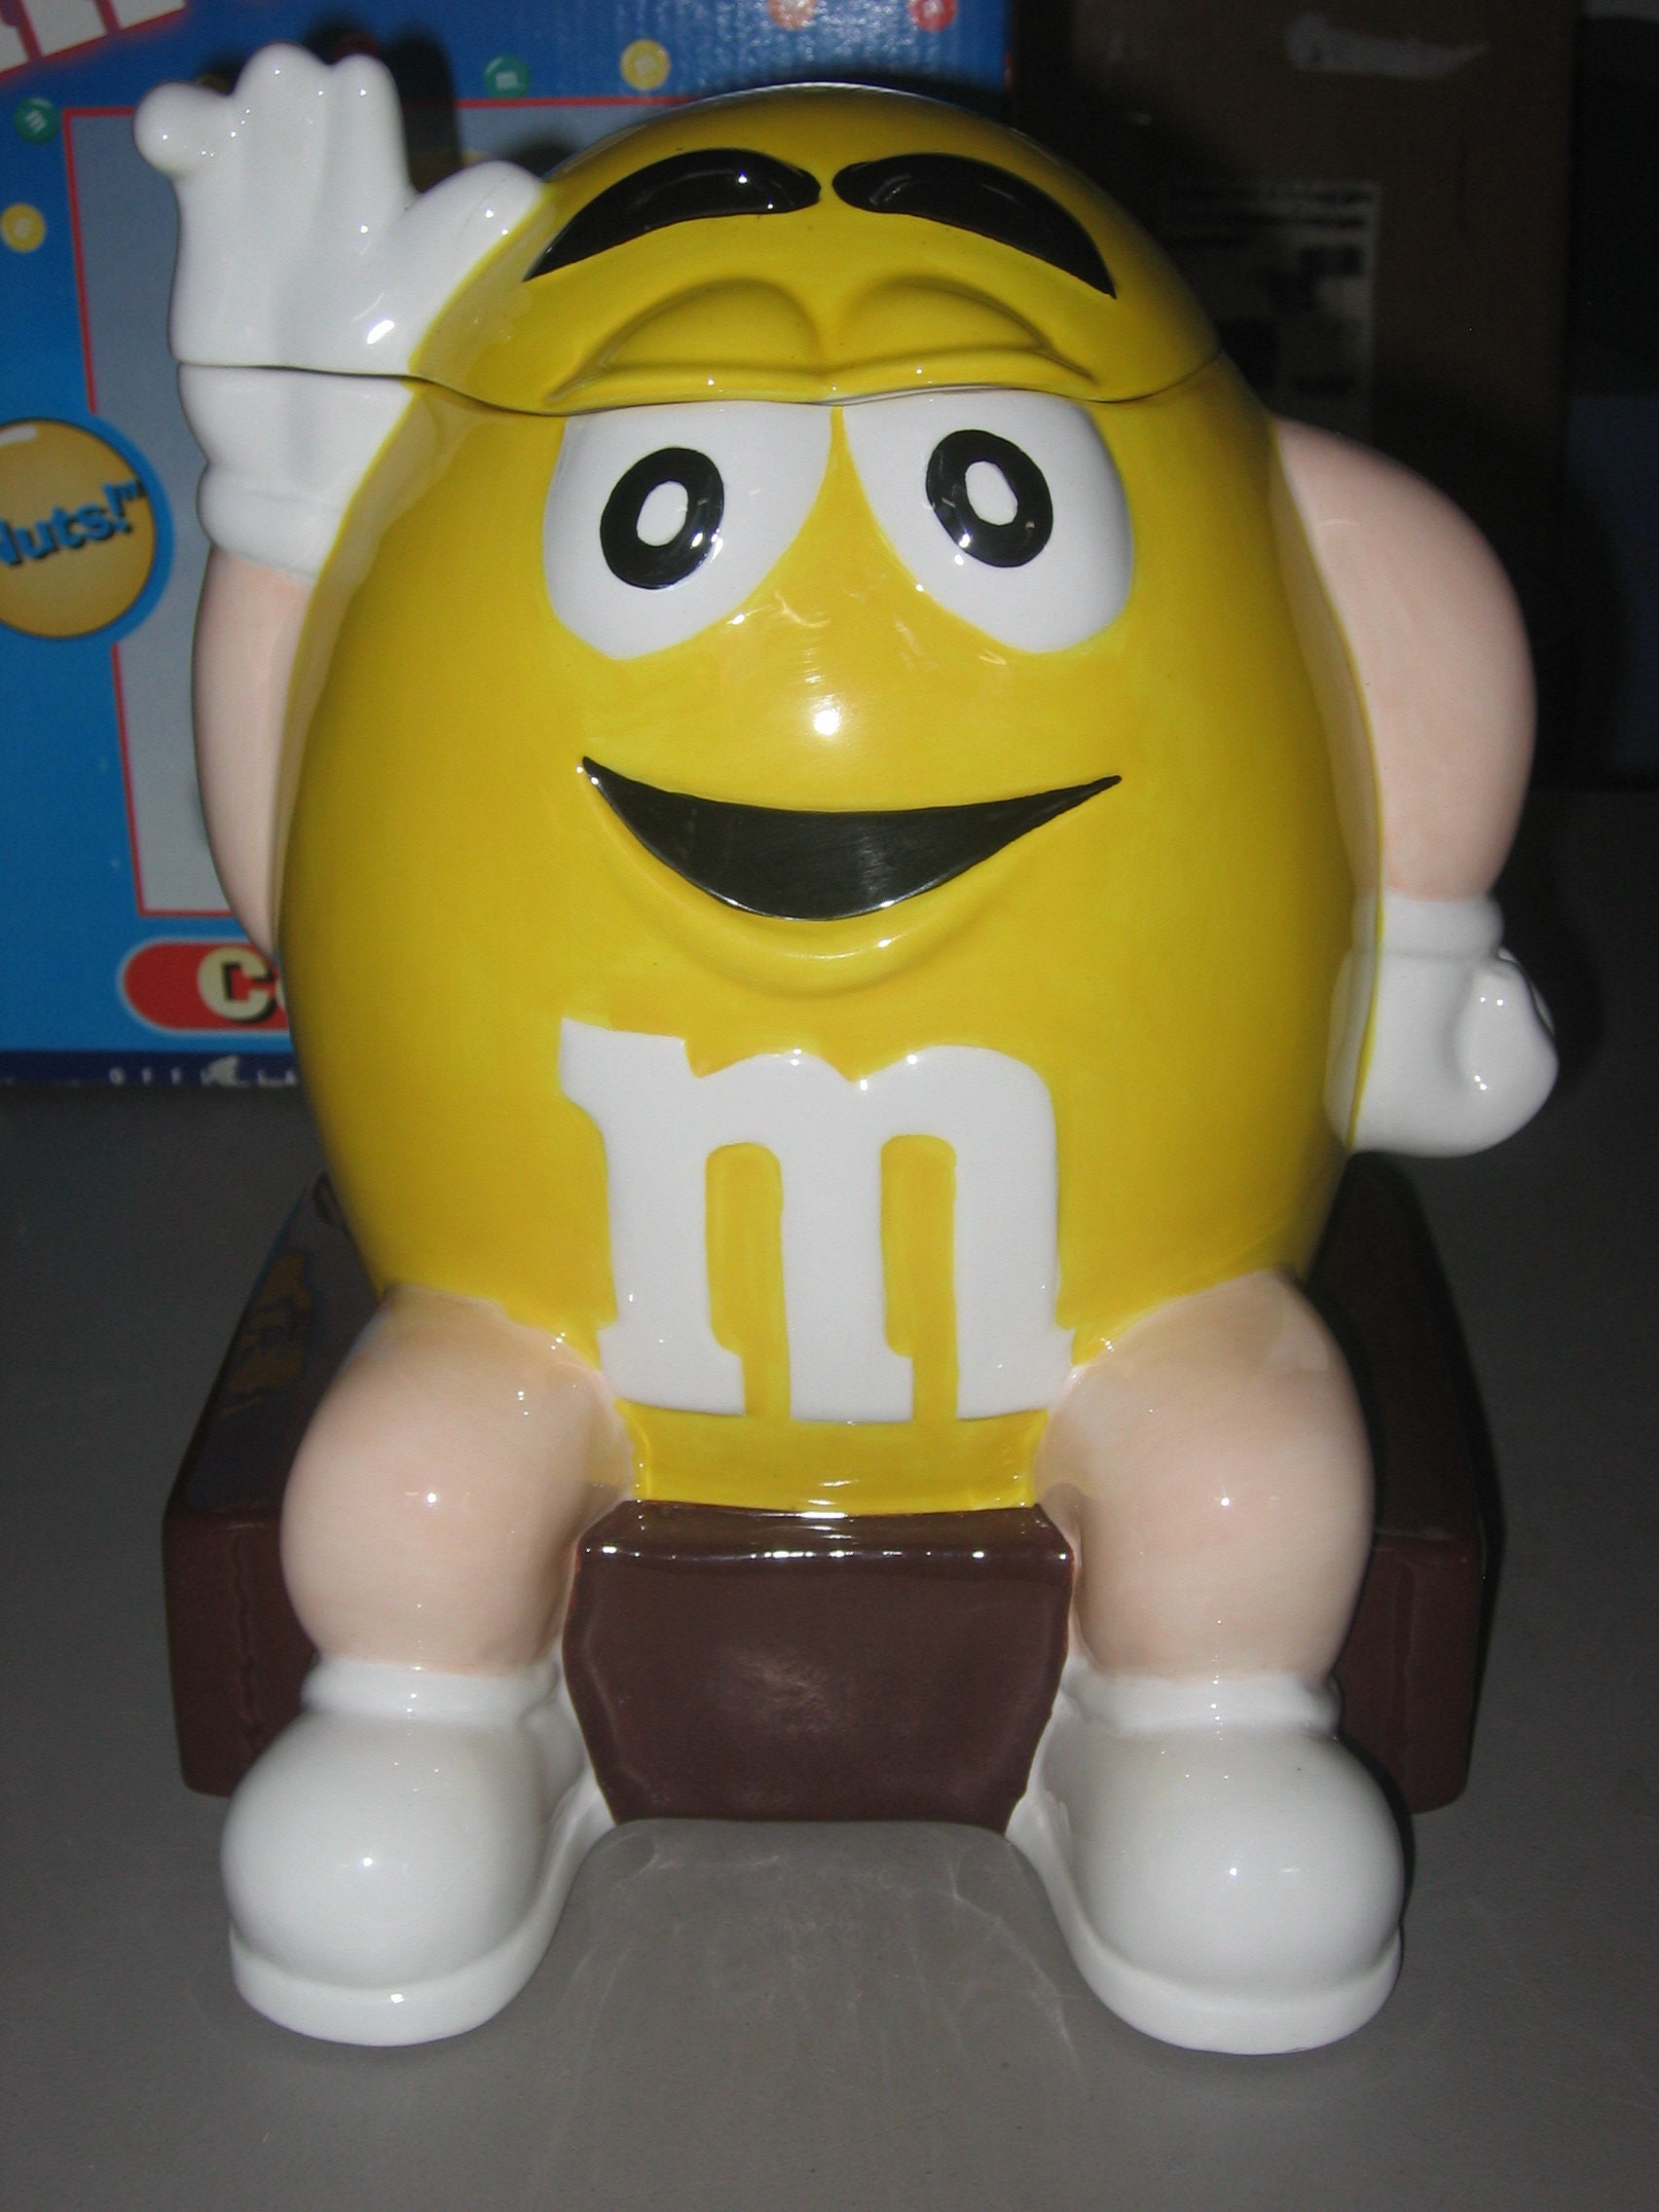 Yellow M&M Cookie Jar